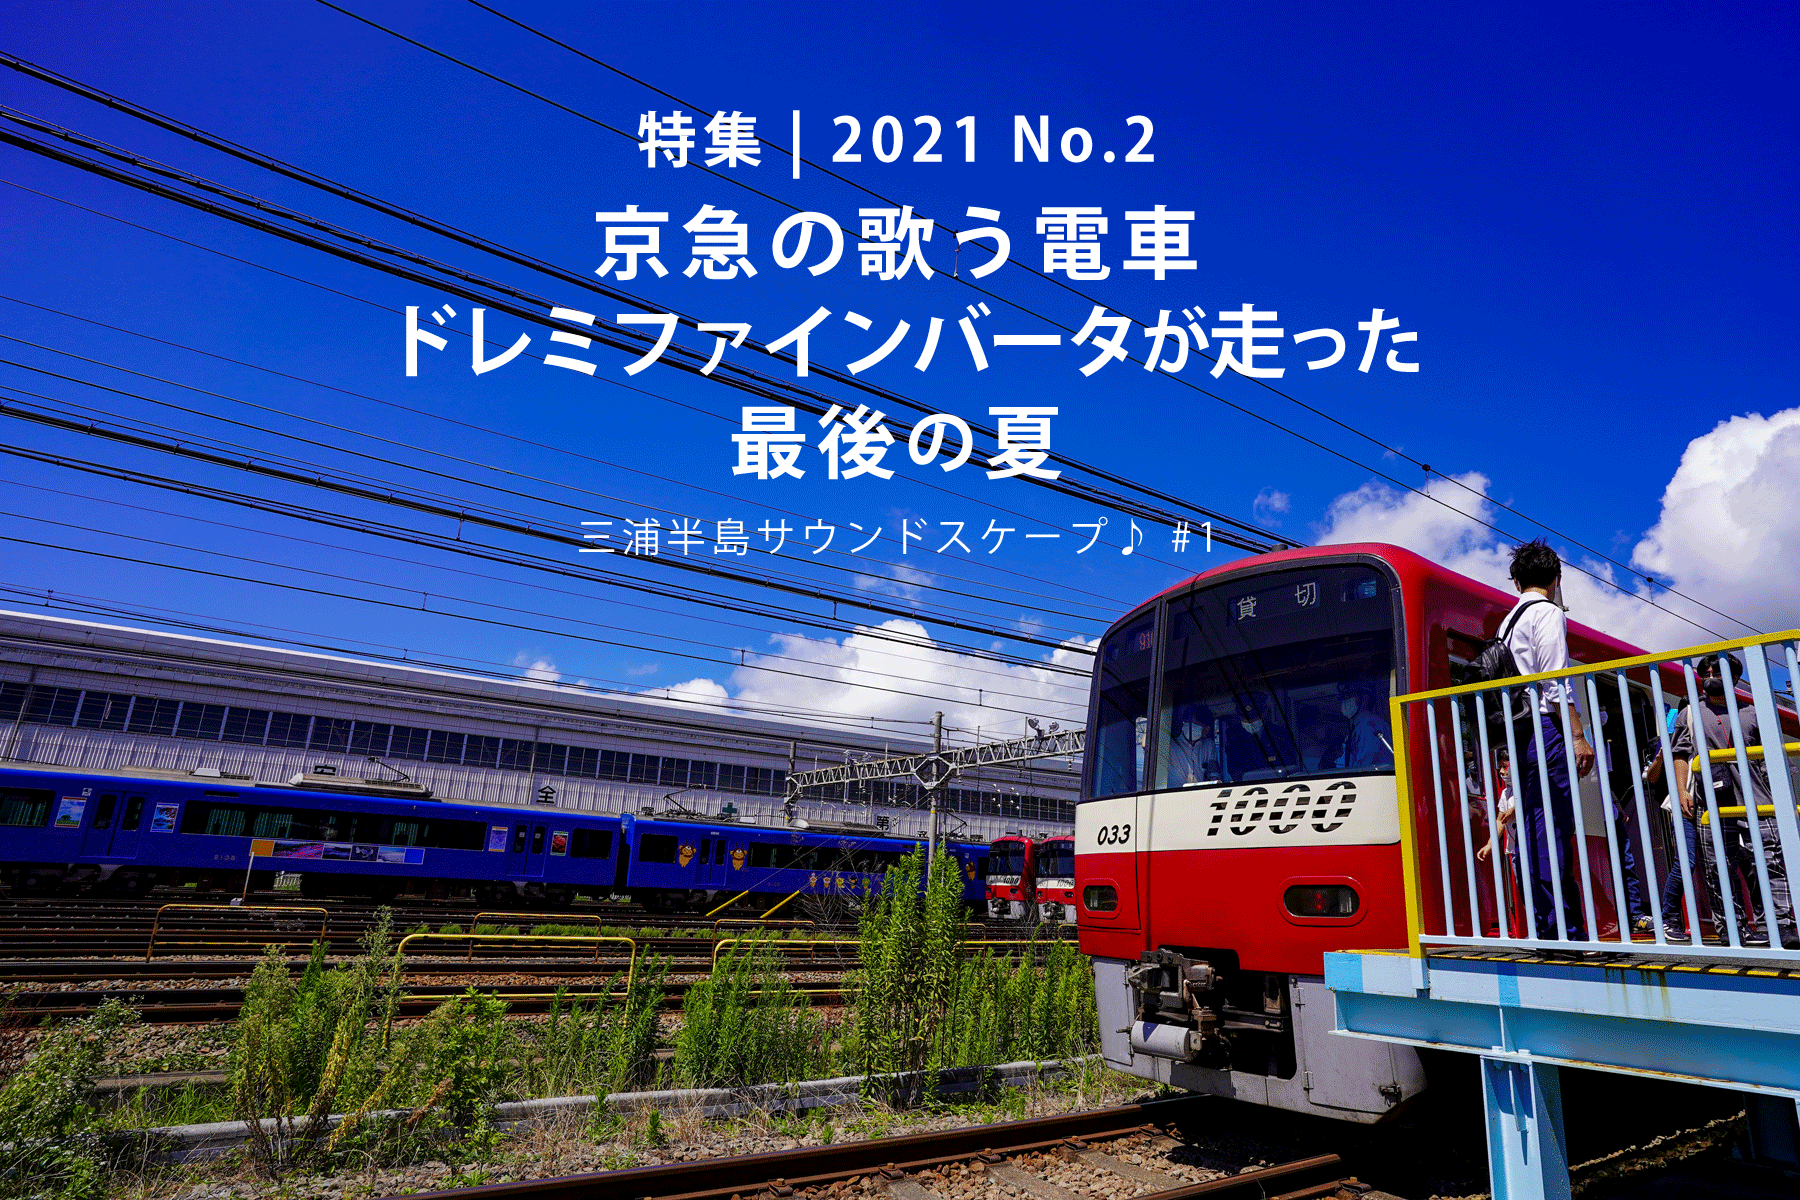 【2021 No.2】特集 | 京急の歌う電車ドレミファインバータが走った最後の夏